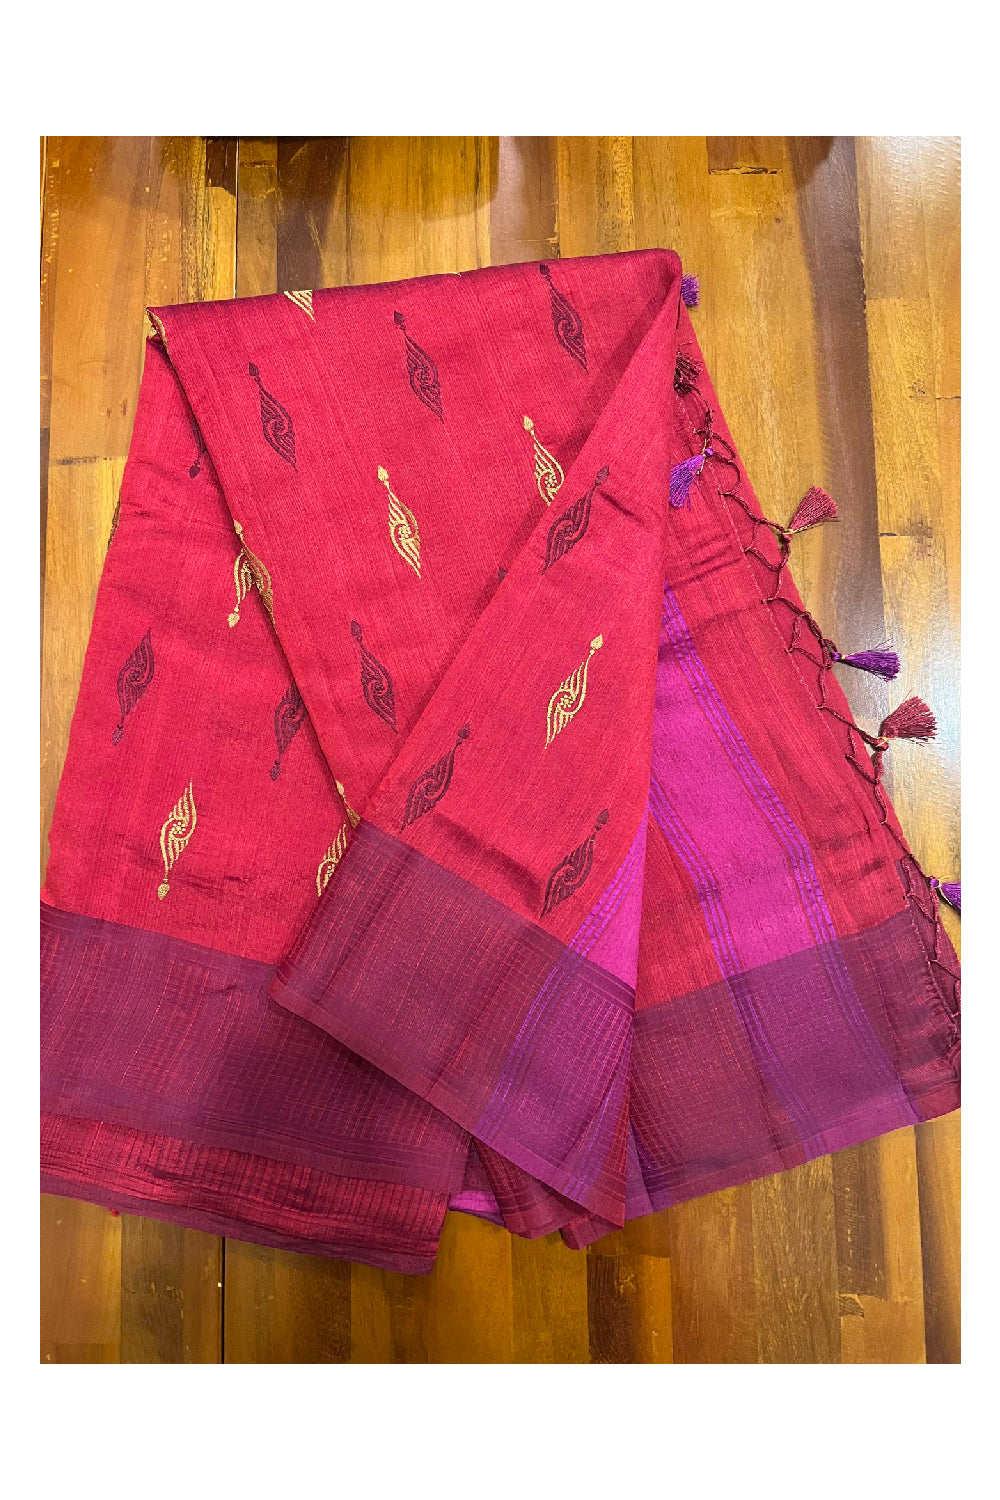 Southloom Red Semi Tussar Designer Saree with Tassels on Pallu